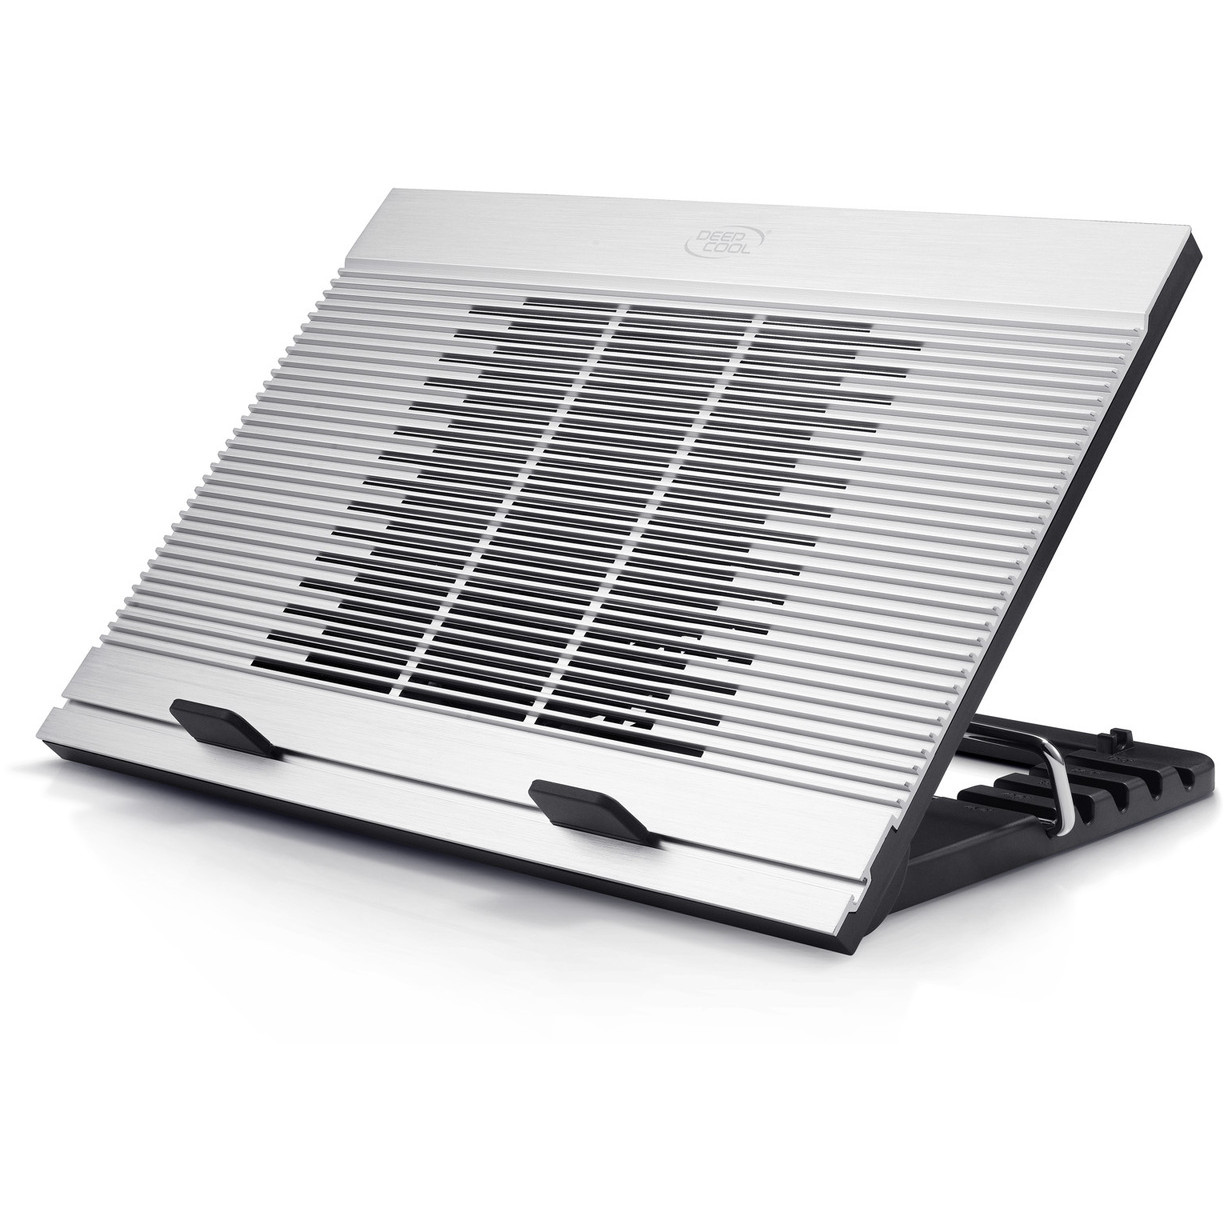  Cooler DeepCool N9 pentru notebook 17", Negru/Argintiu 